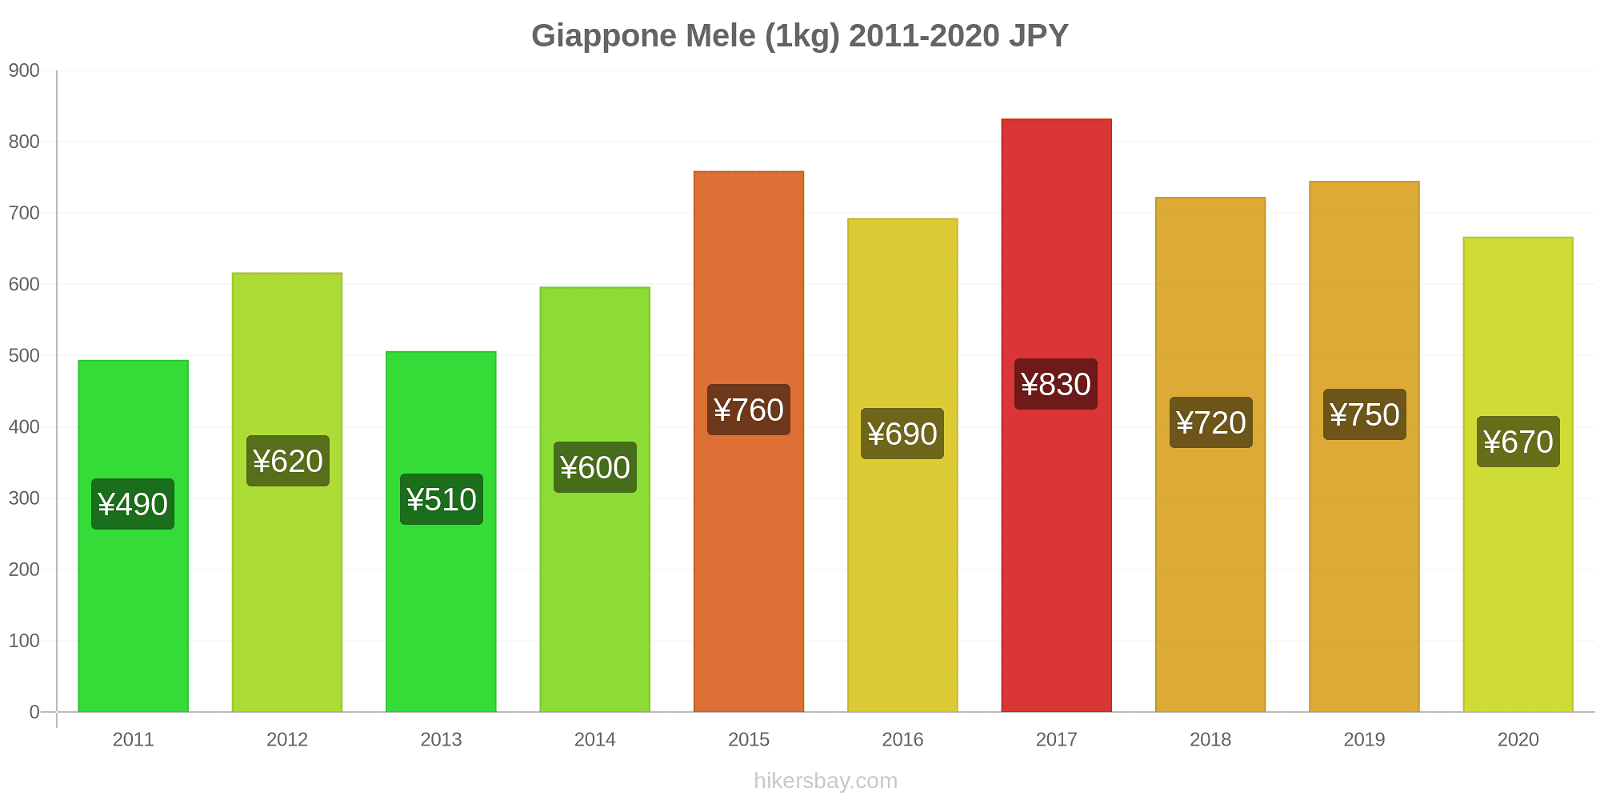 Giappone variazioni di prezzo Mele (1kg) hikersbay.com